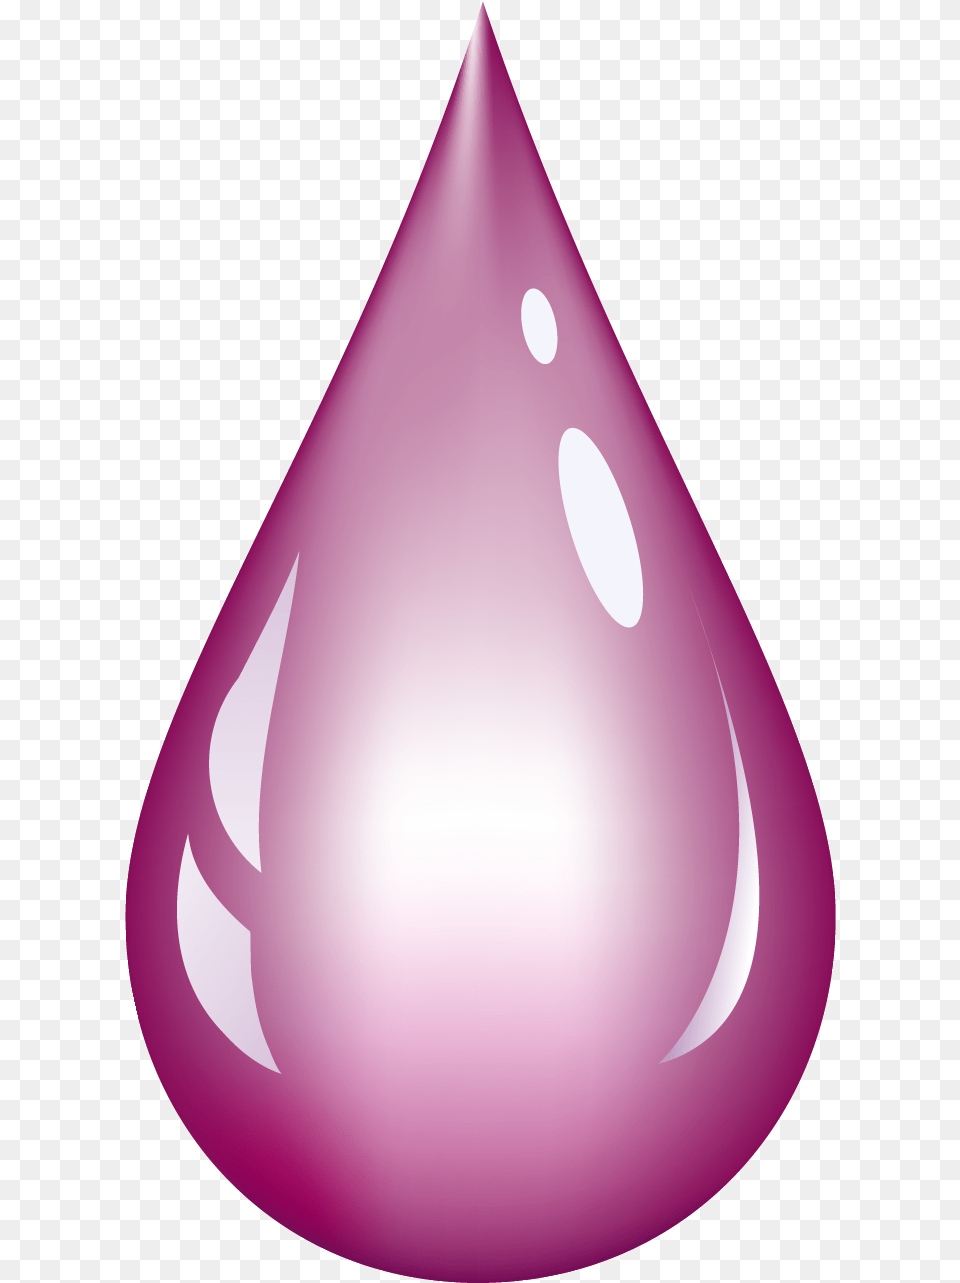 Water Drops Konfest Pink Water Drop, Droplet, Lighting, Clothing, Hat Free Transparent Png